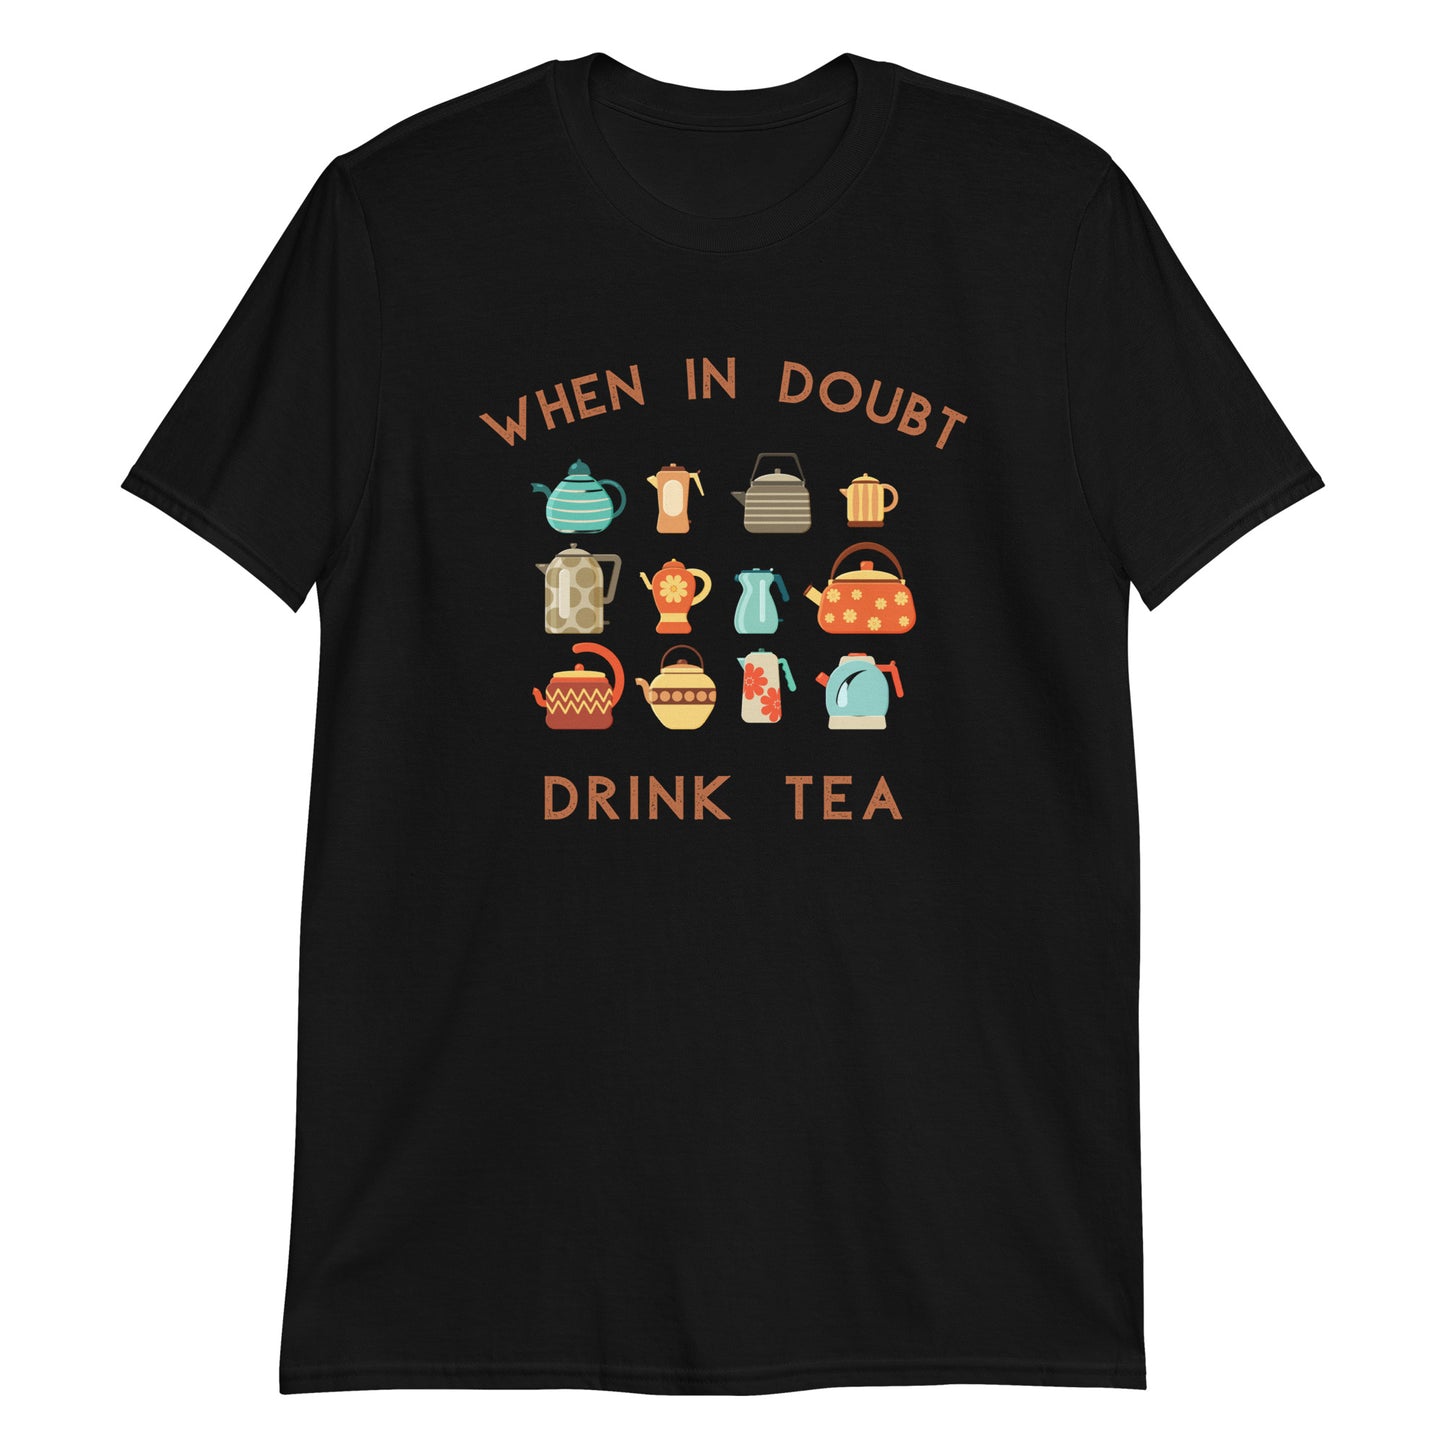 When In Doubt Drink Tea - Short-Sleeve Unisex T-Shirt Black Unisex T-shirt Tea